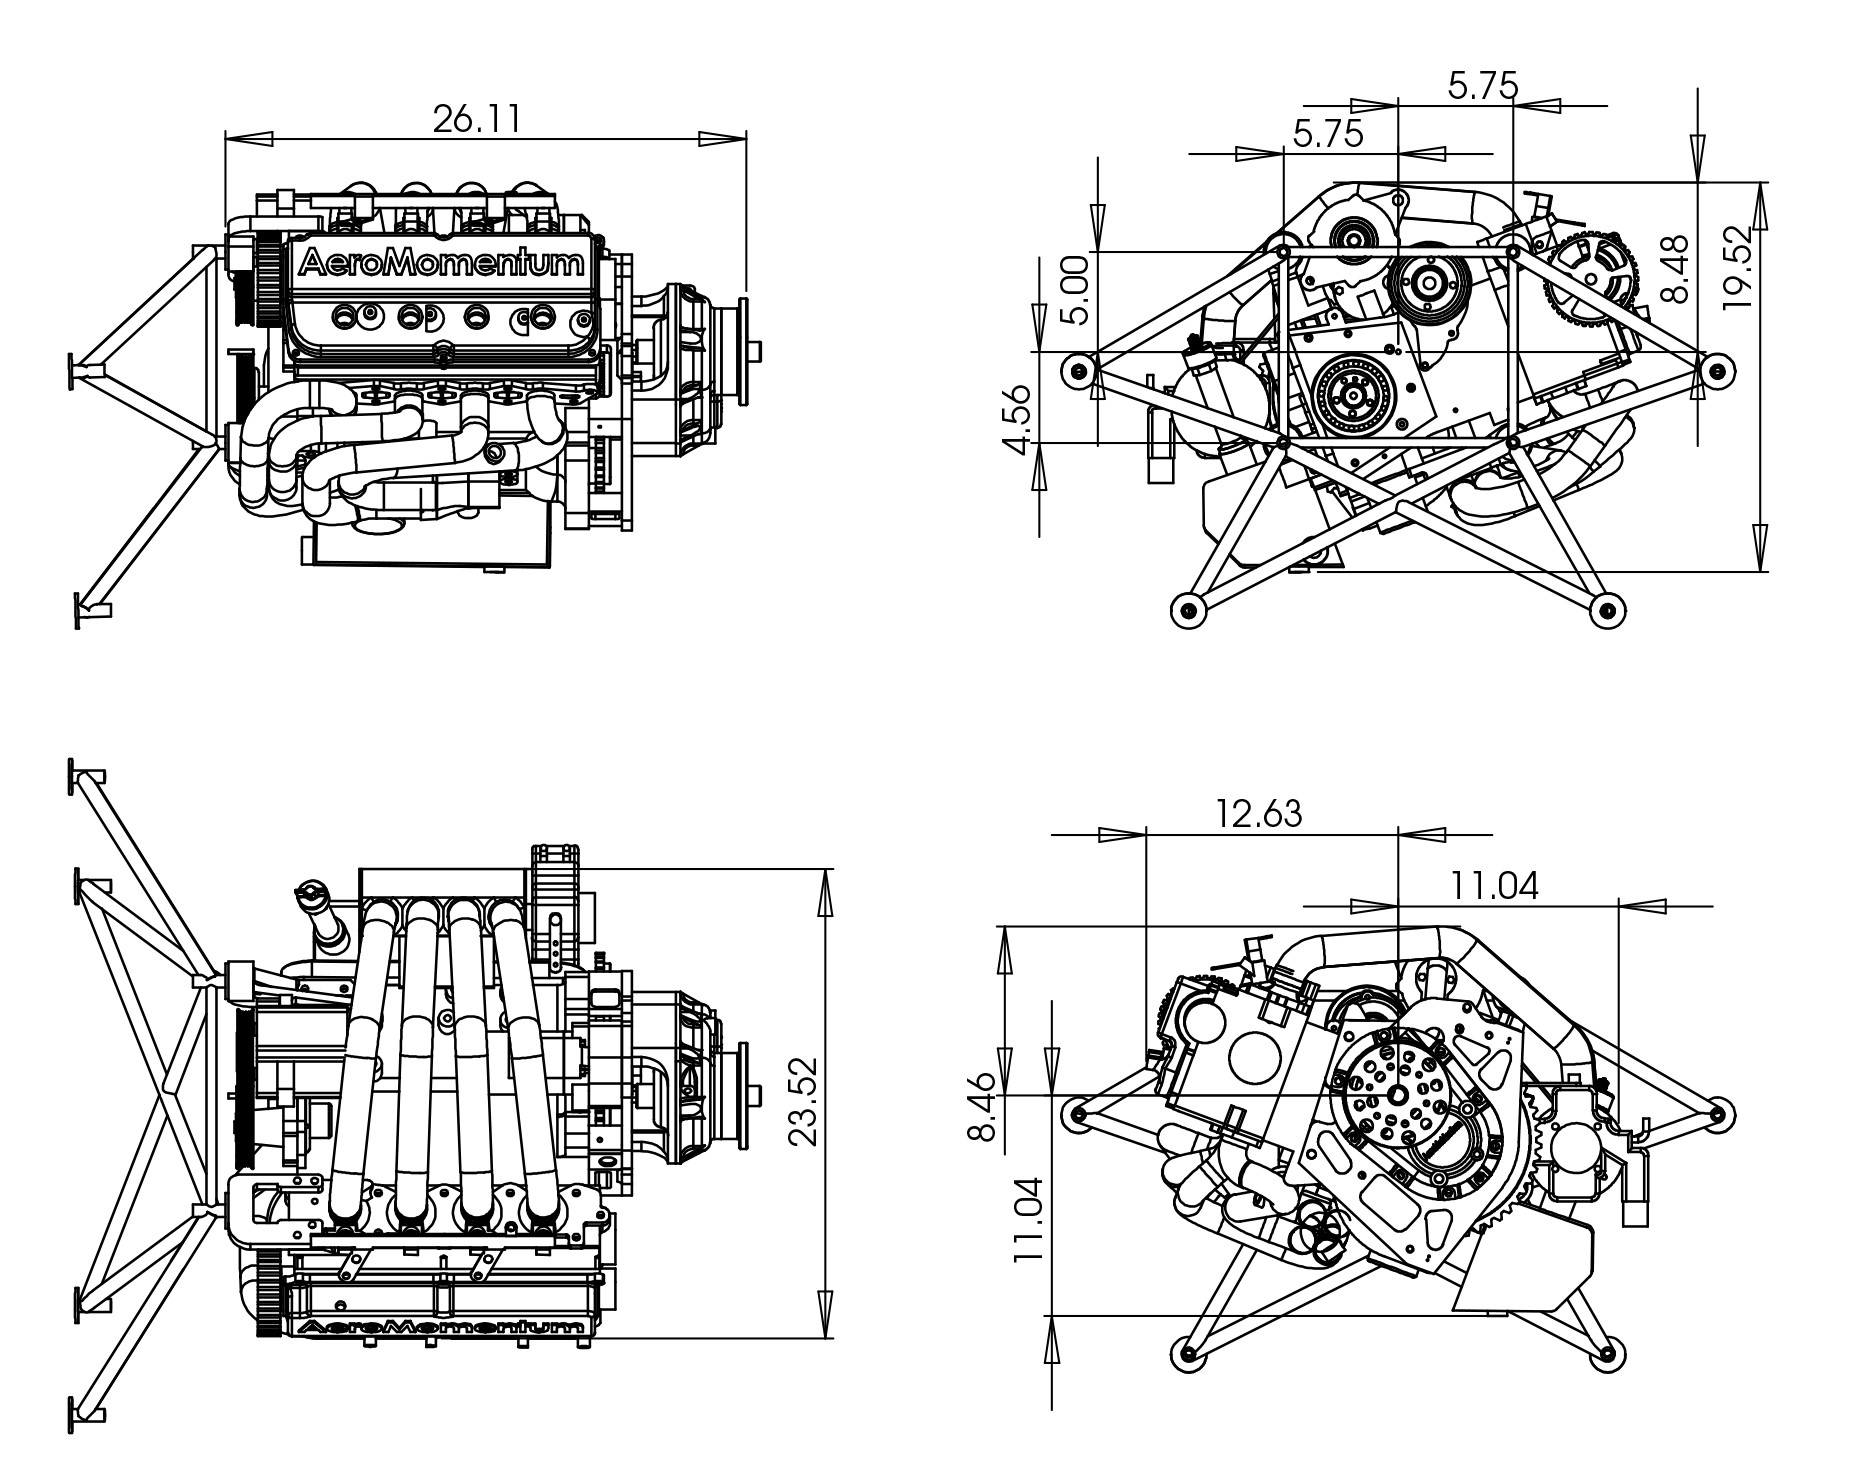 Rotax Engine Diagram Am15 Of Rotax Engine Diagram